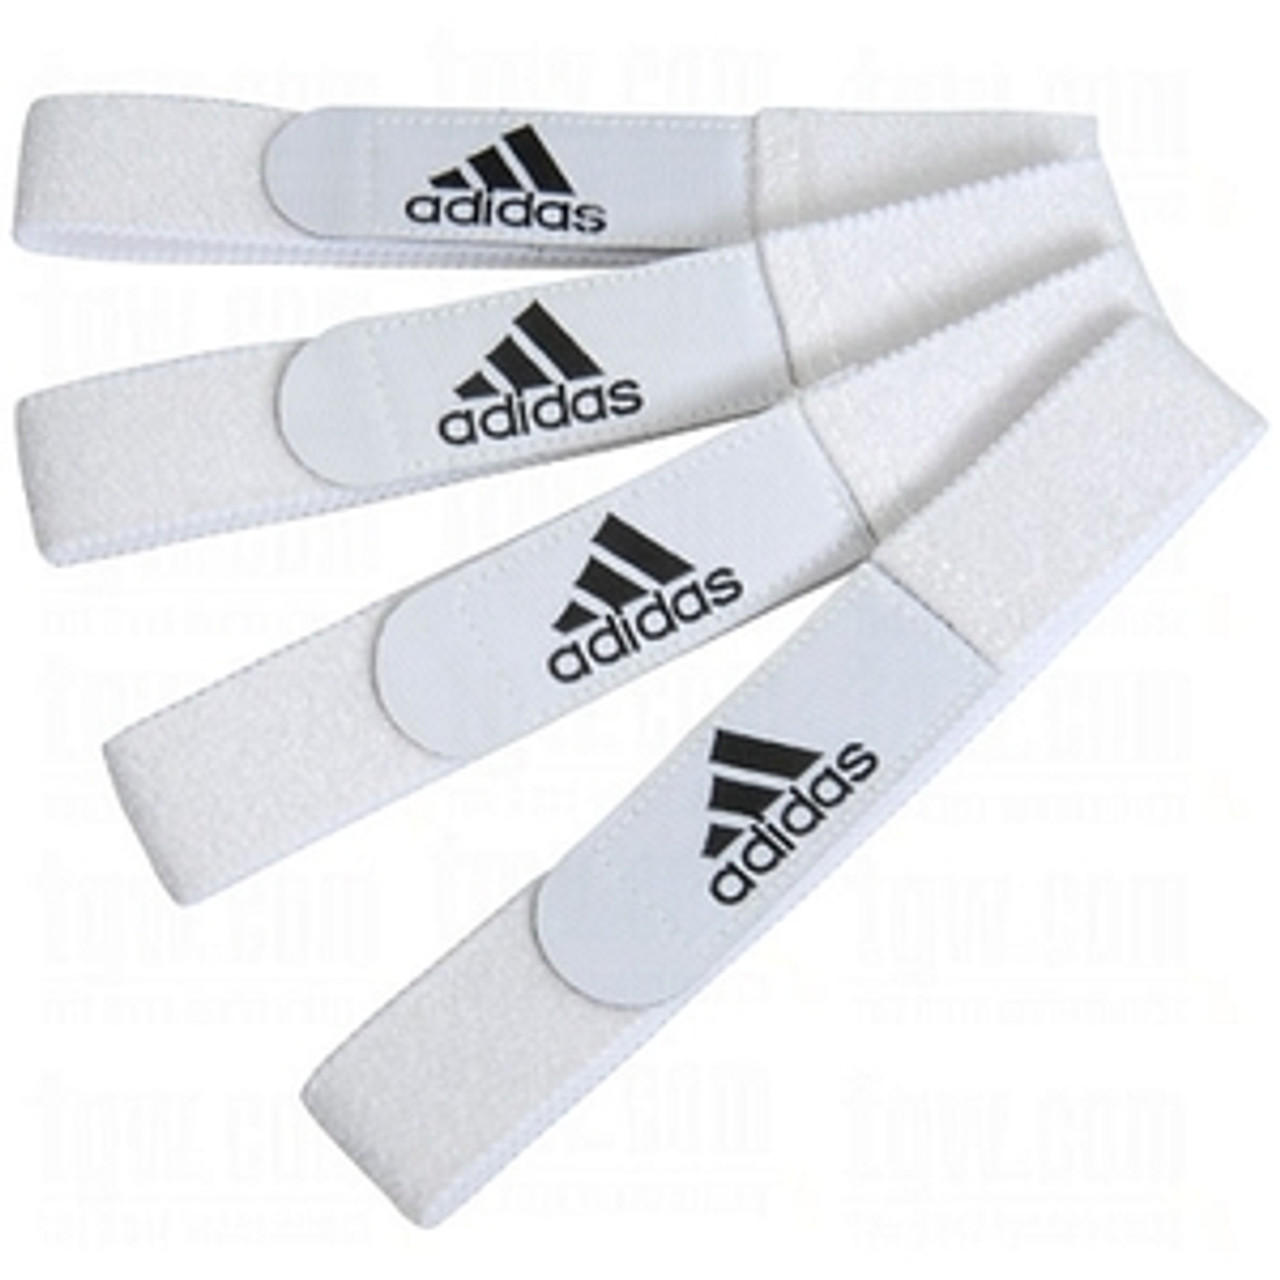 adidas soccer shin guard straps